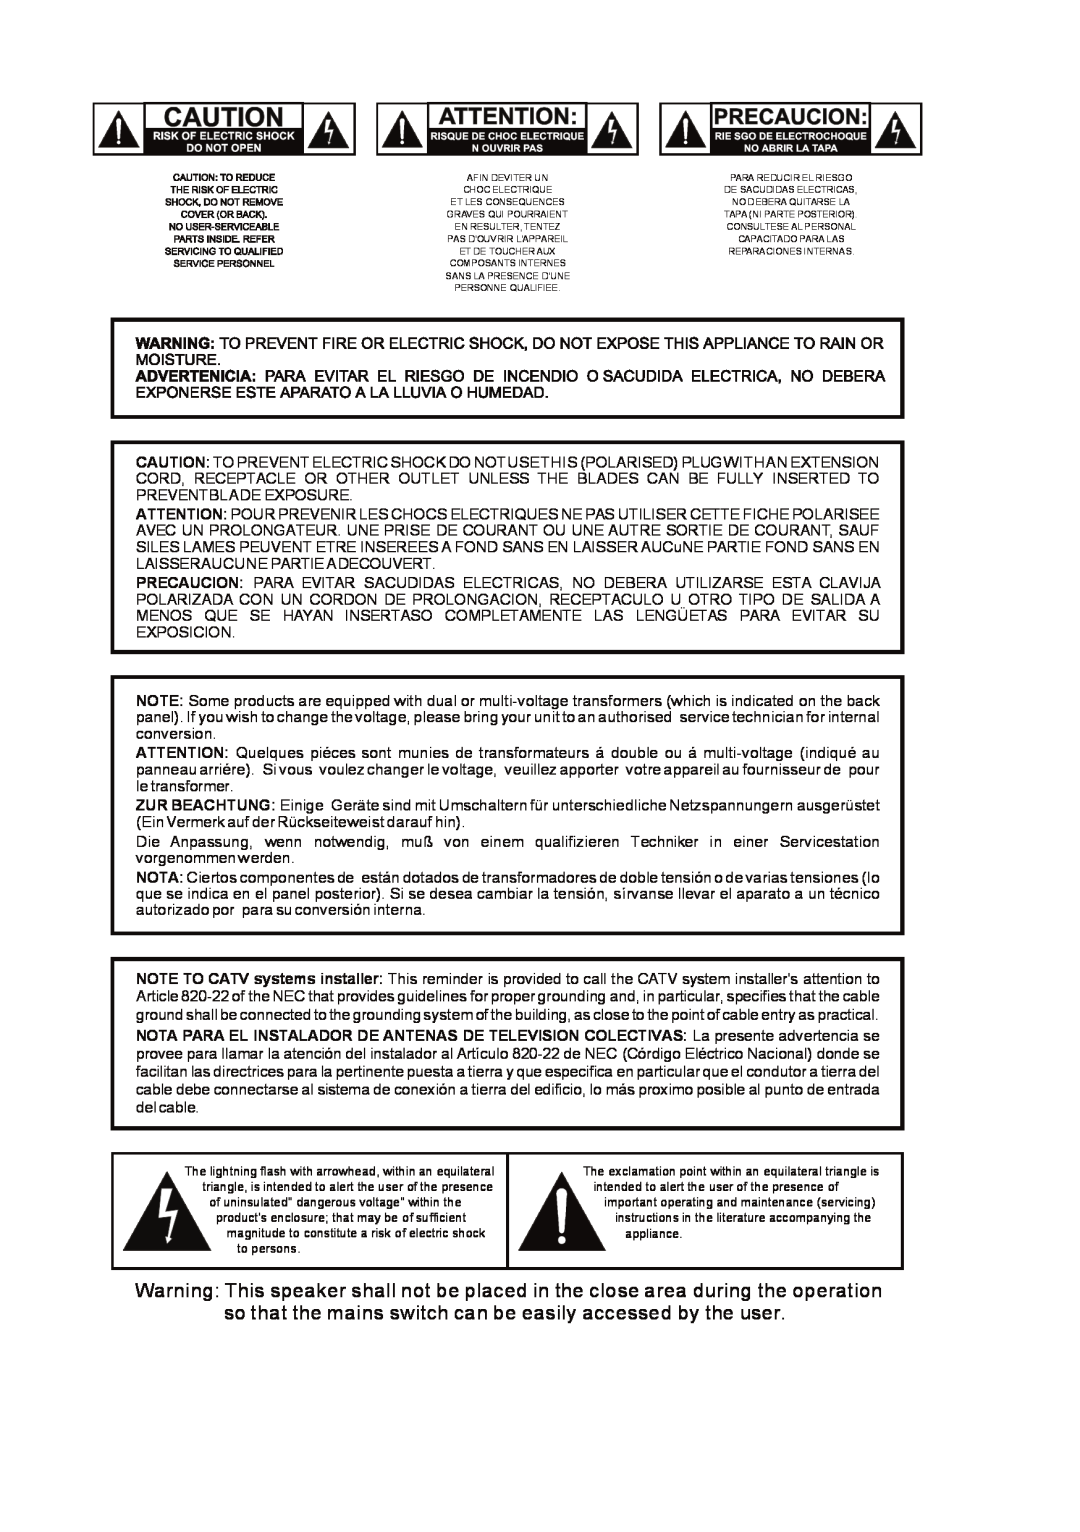 M-Audio 3 manual to persons, appliance, Afin Deviter Un, Reparaciones Internas, Personne Qualifiee 